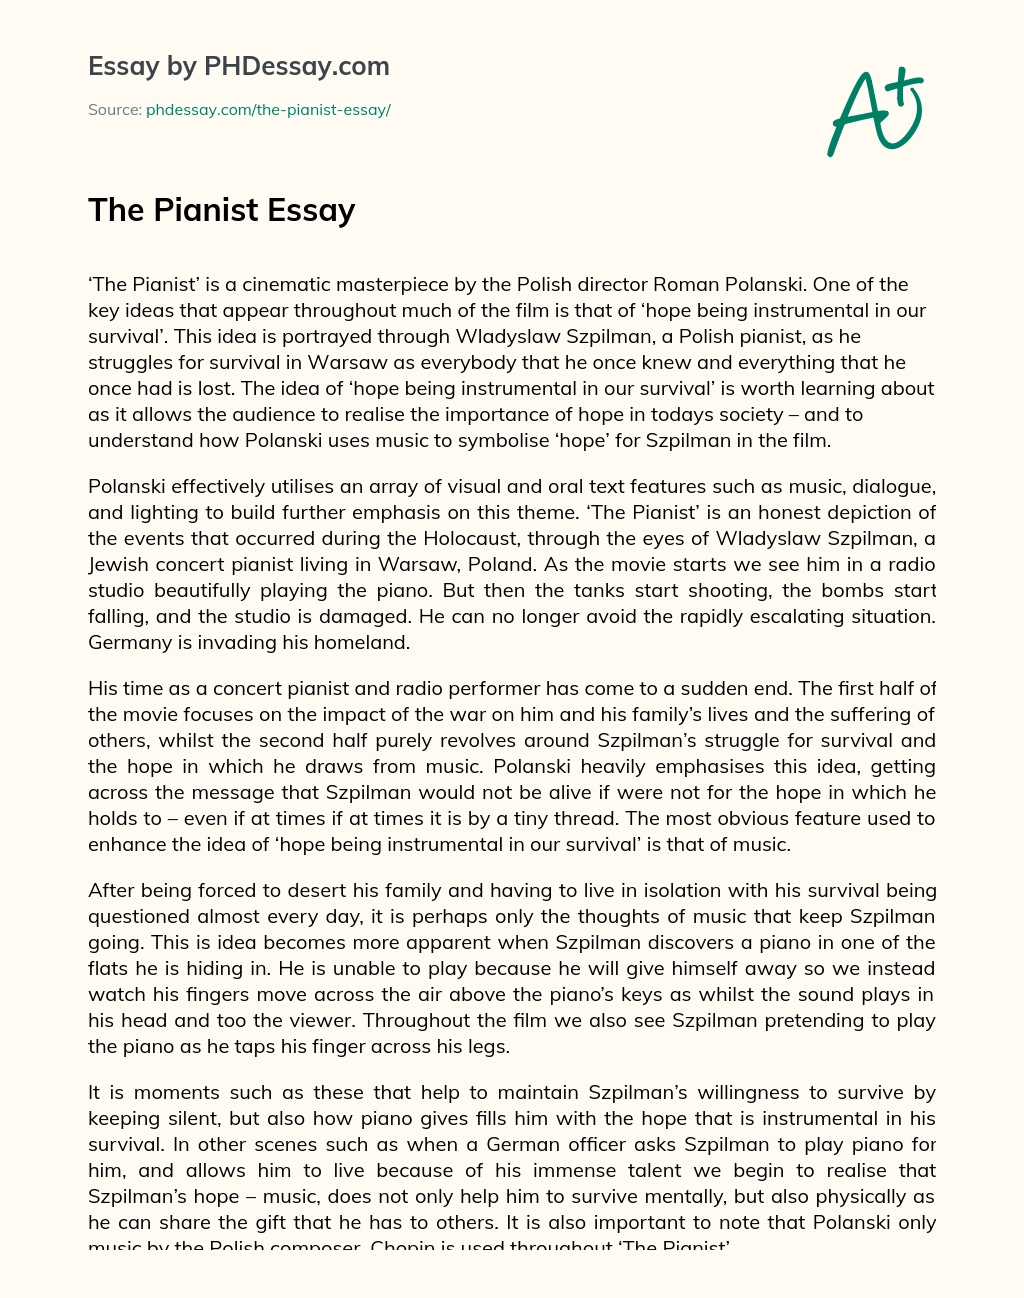 The Pianist Essay essay